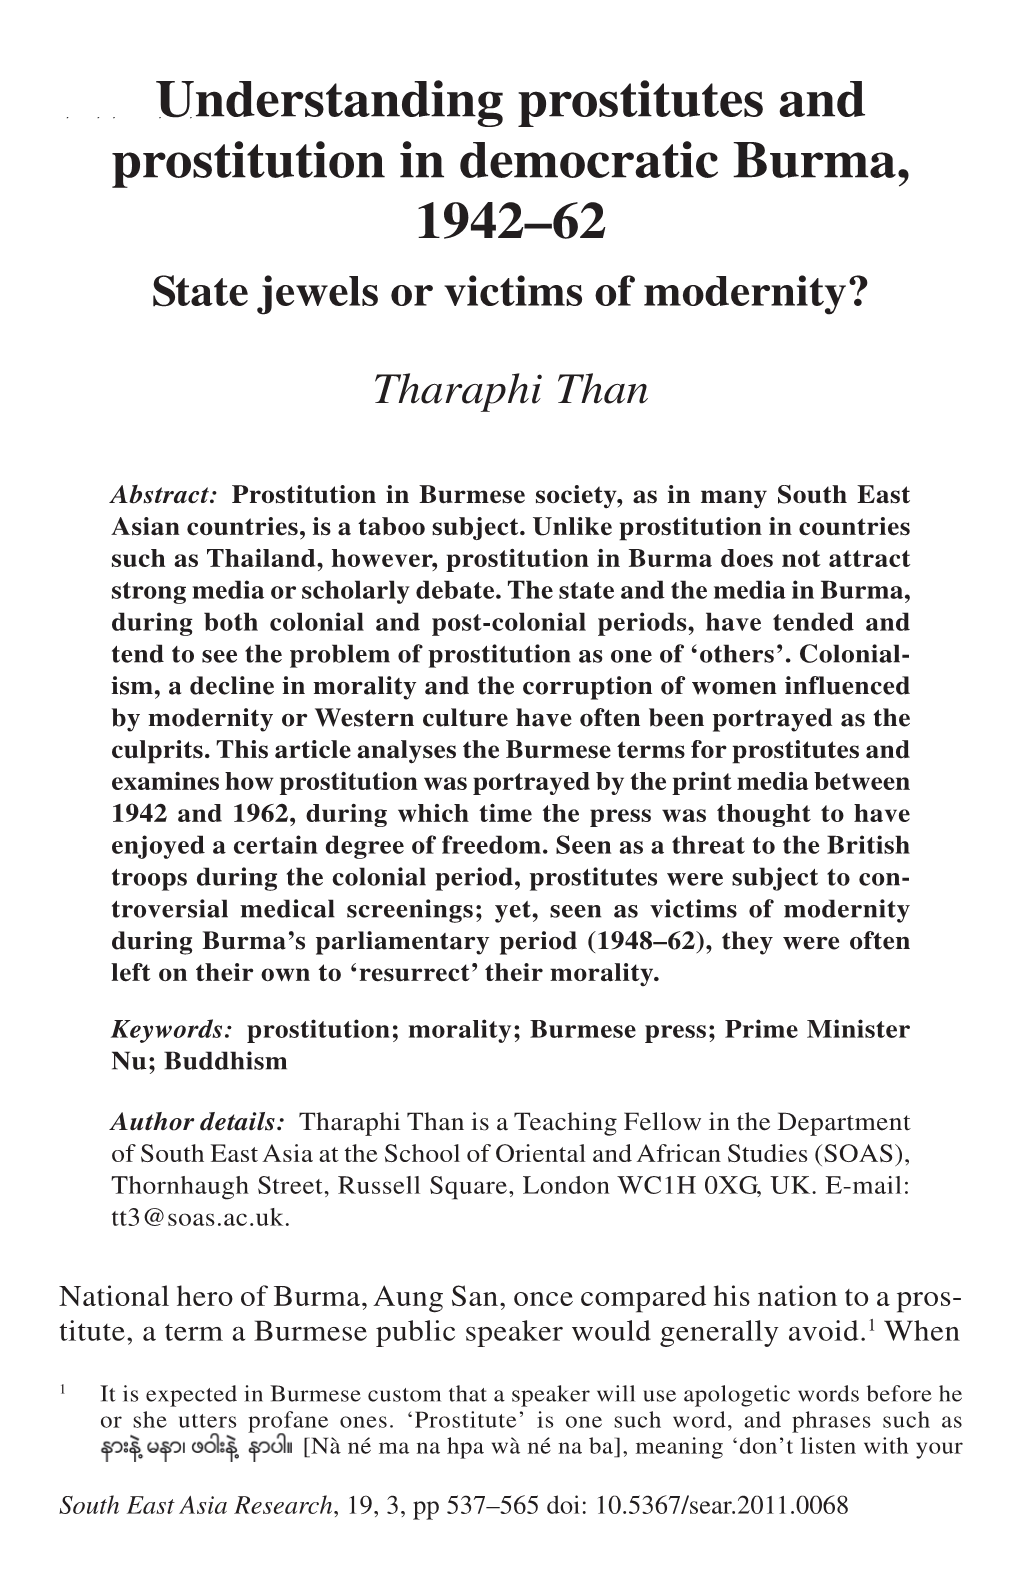 Understanding Prostitutes and Prostitution in Democratic Burma